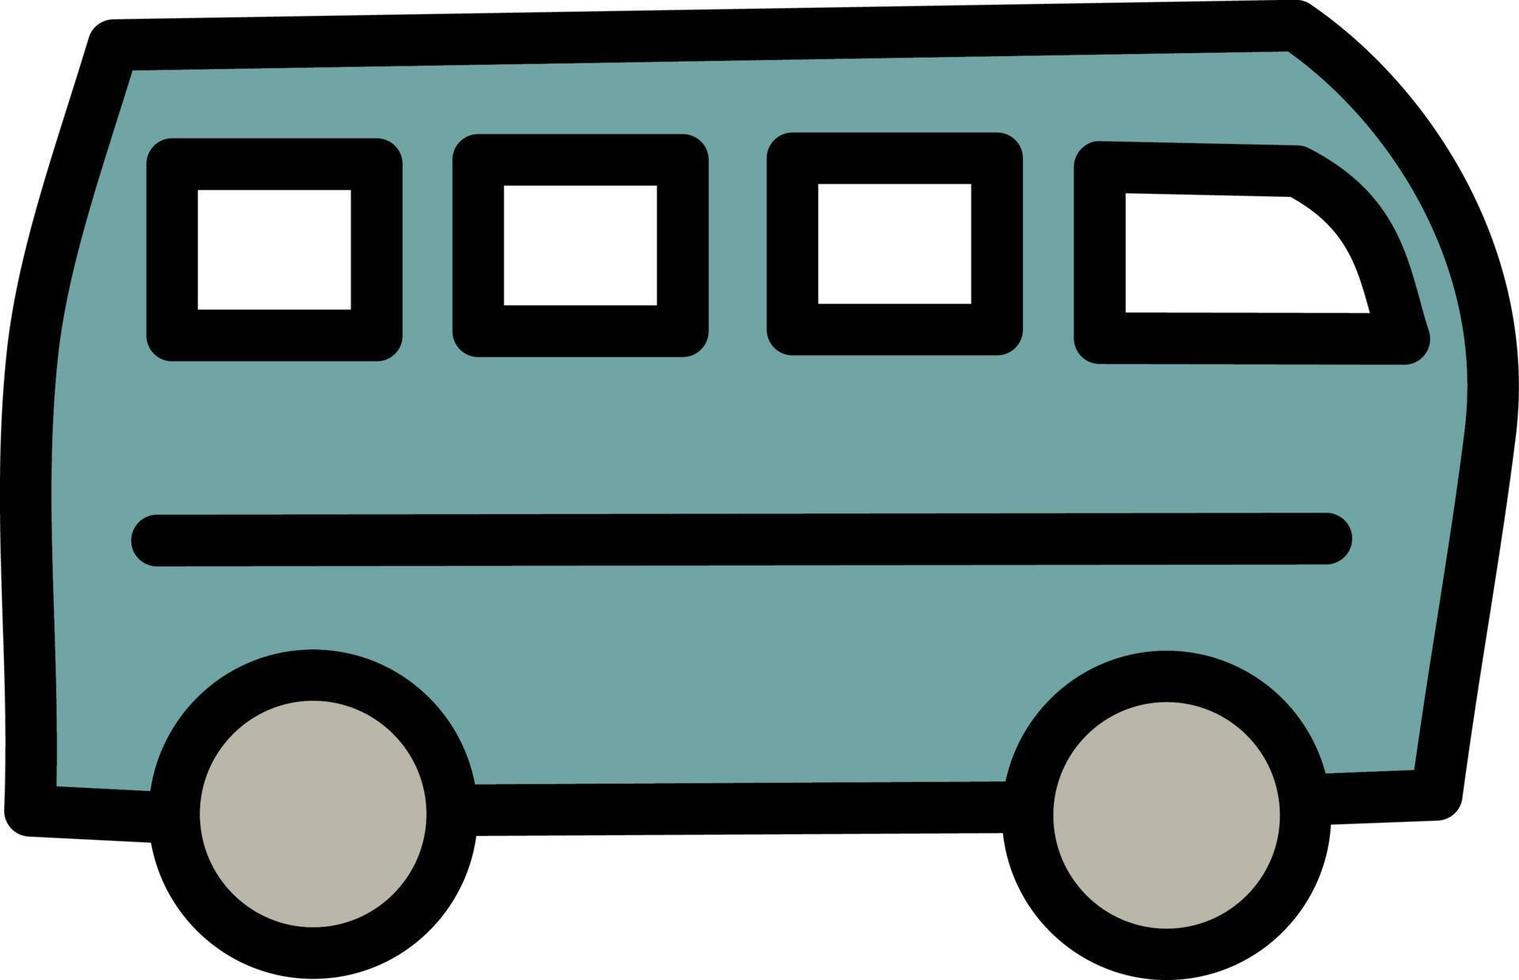 Transportation bus, illustration, vector on a white background.